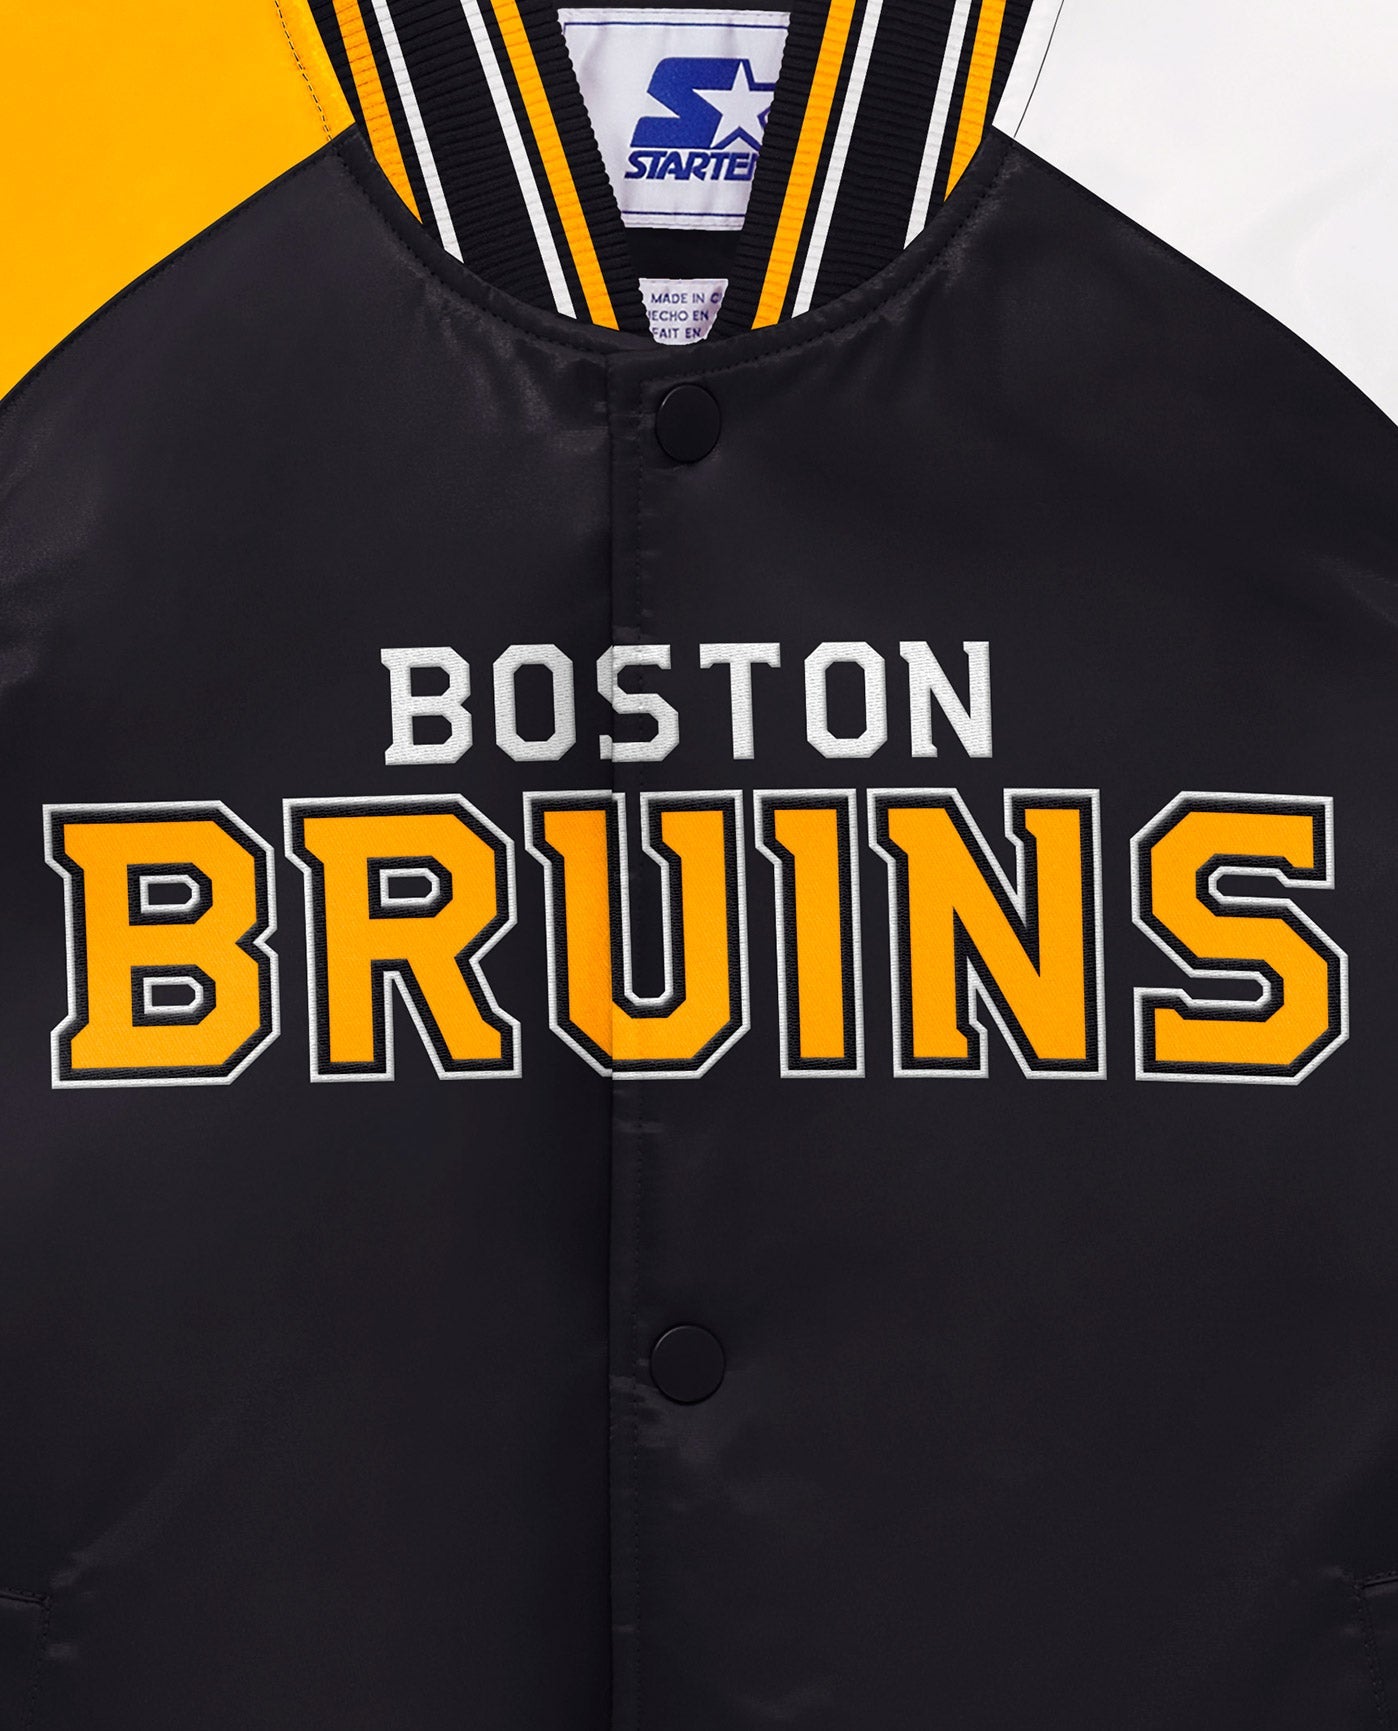 Boston Bruins Vintage in Boston Bruins Team Shop 